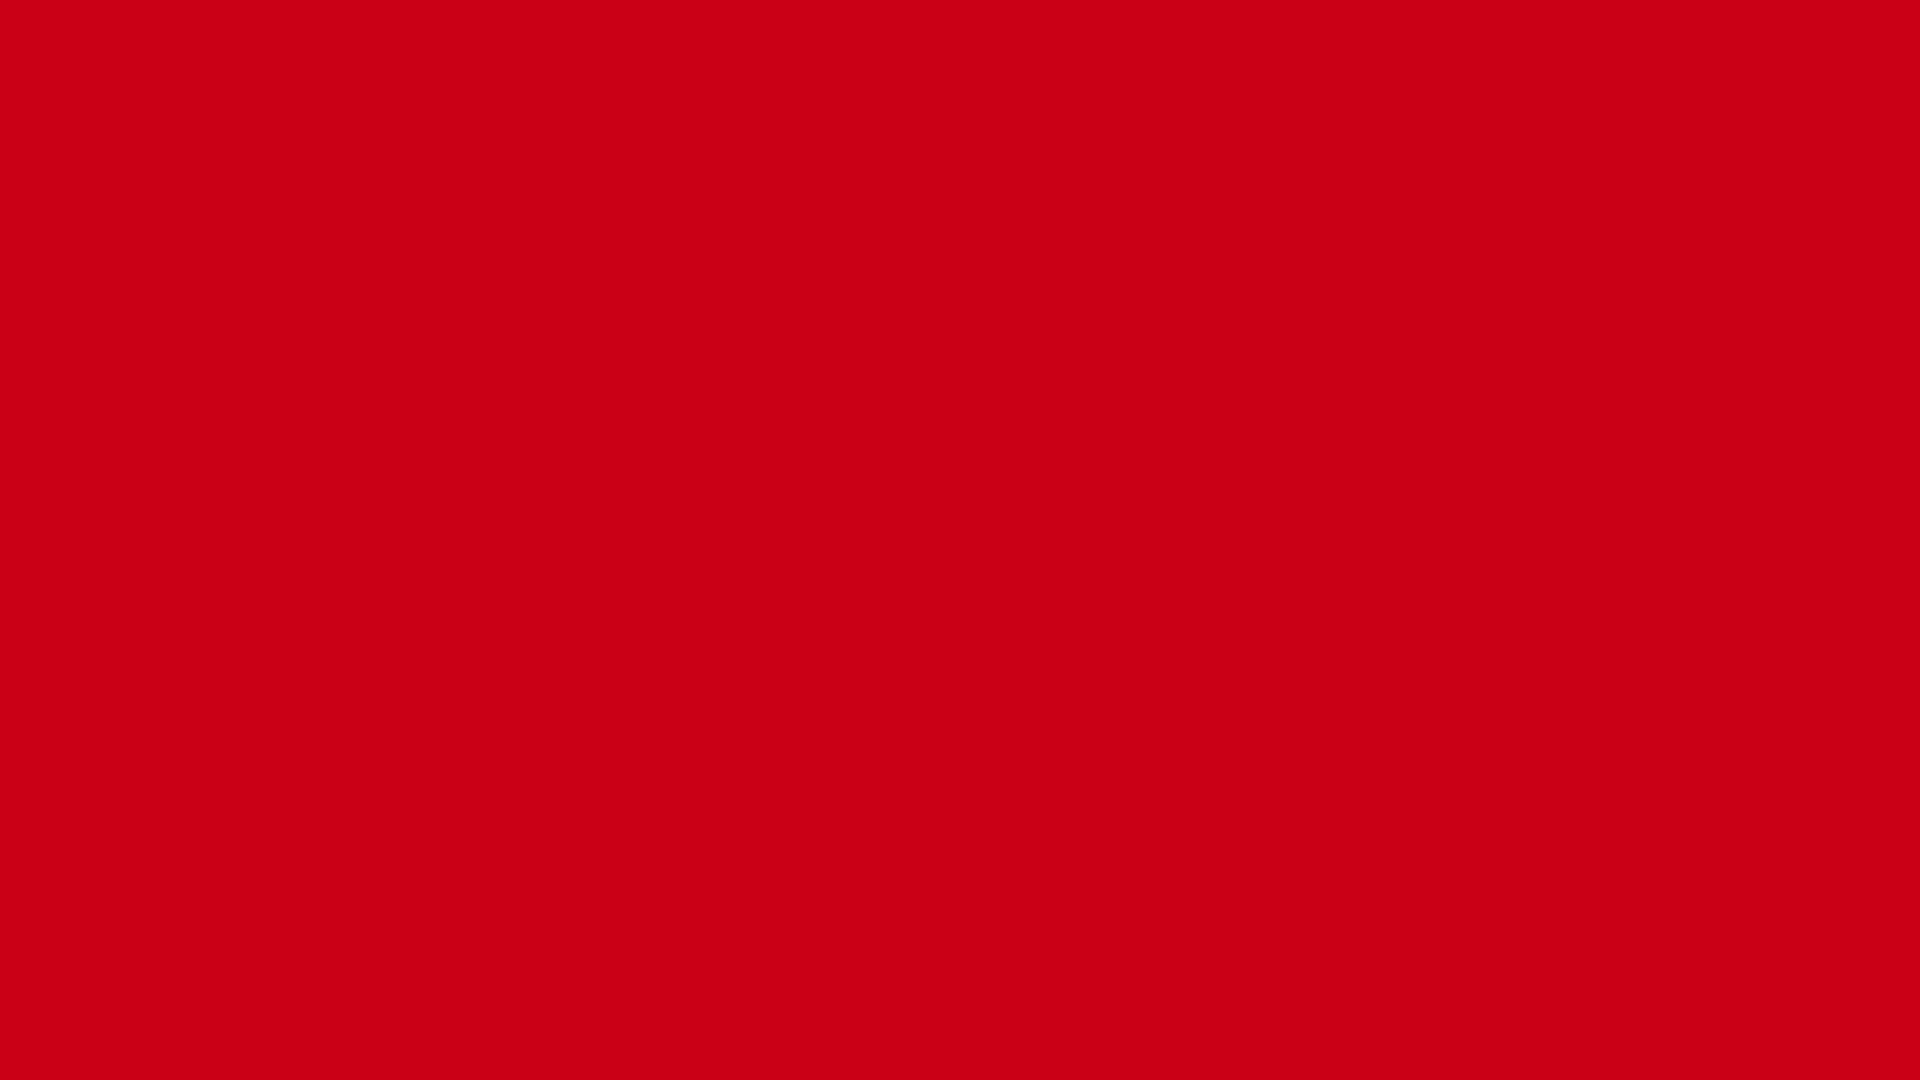 1920x1080 Harvard Crimson Solid Color Background